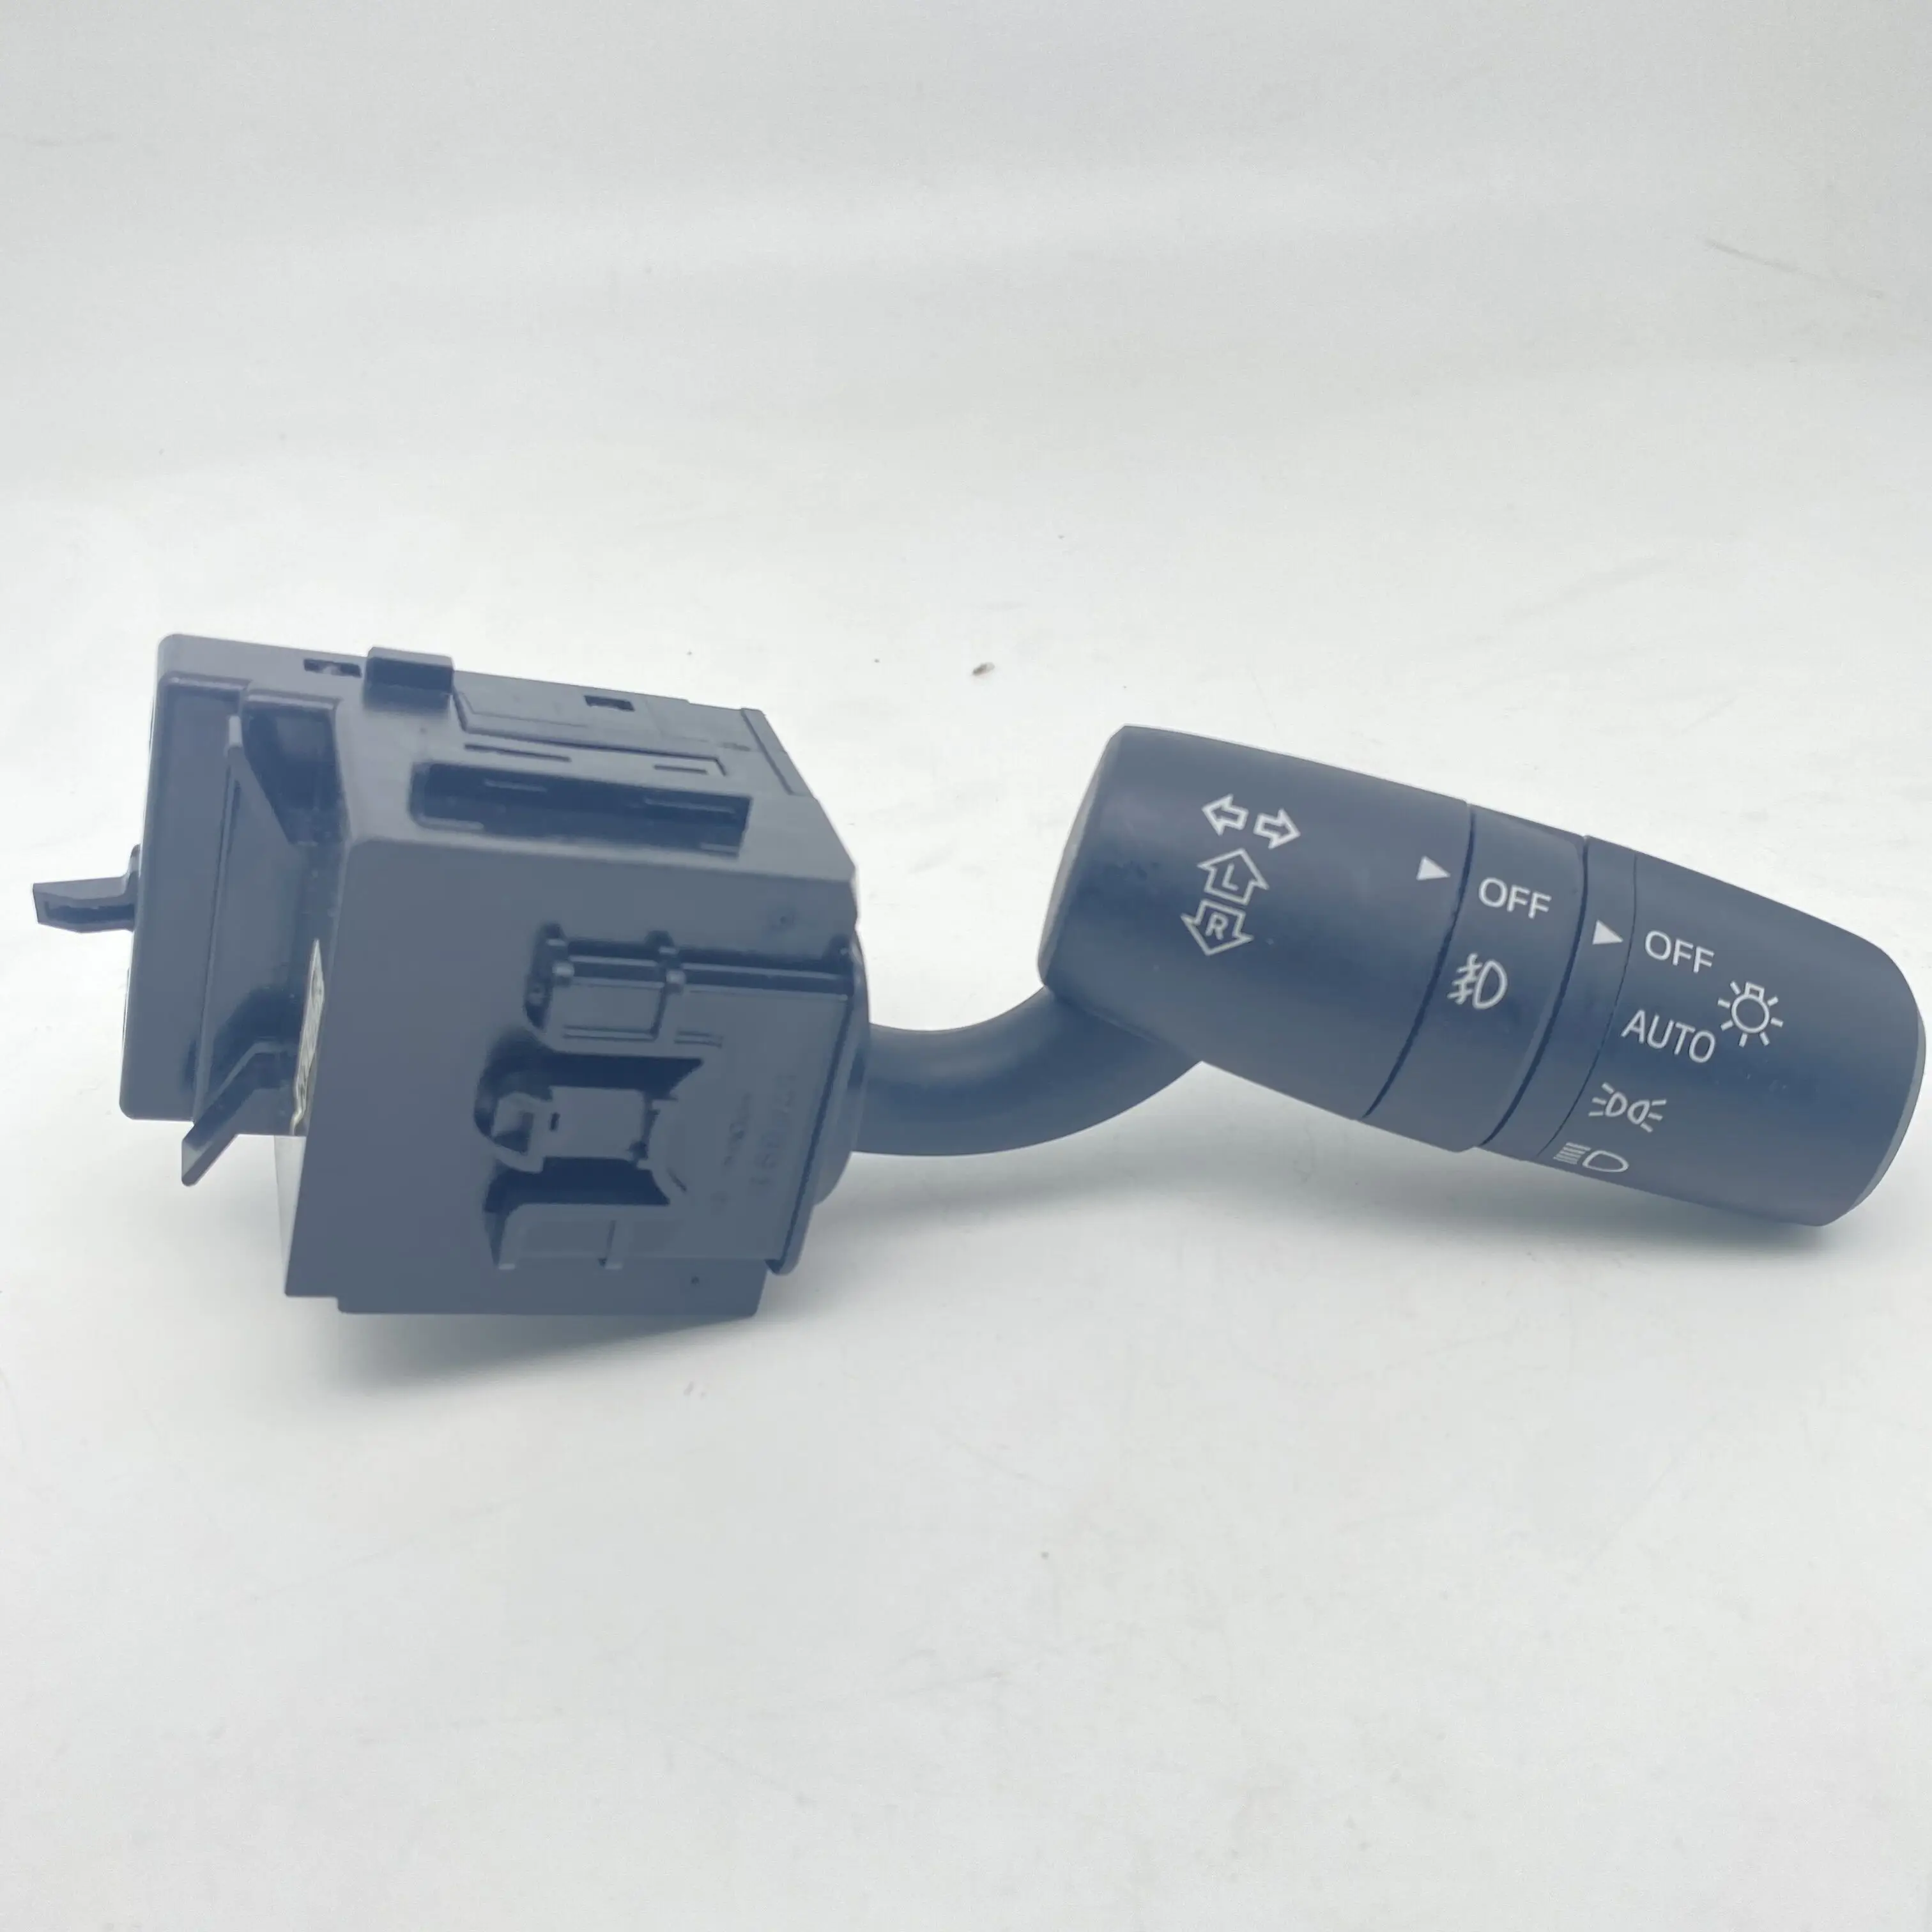 Original headlight fog light turn signal switch (with auto) RHD For Mazda CX-5 2013-2020 KF20-66-122 D24E-66-122